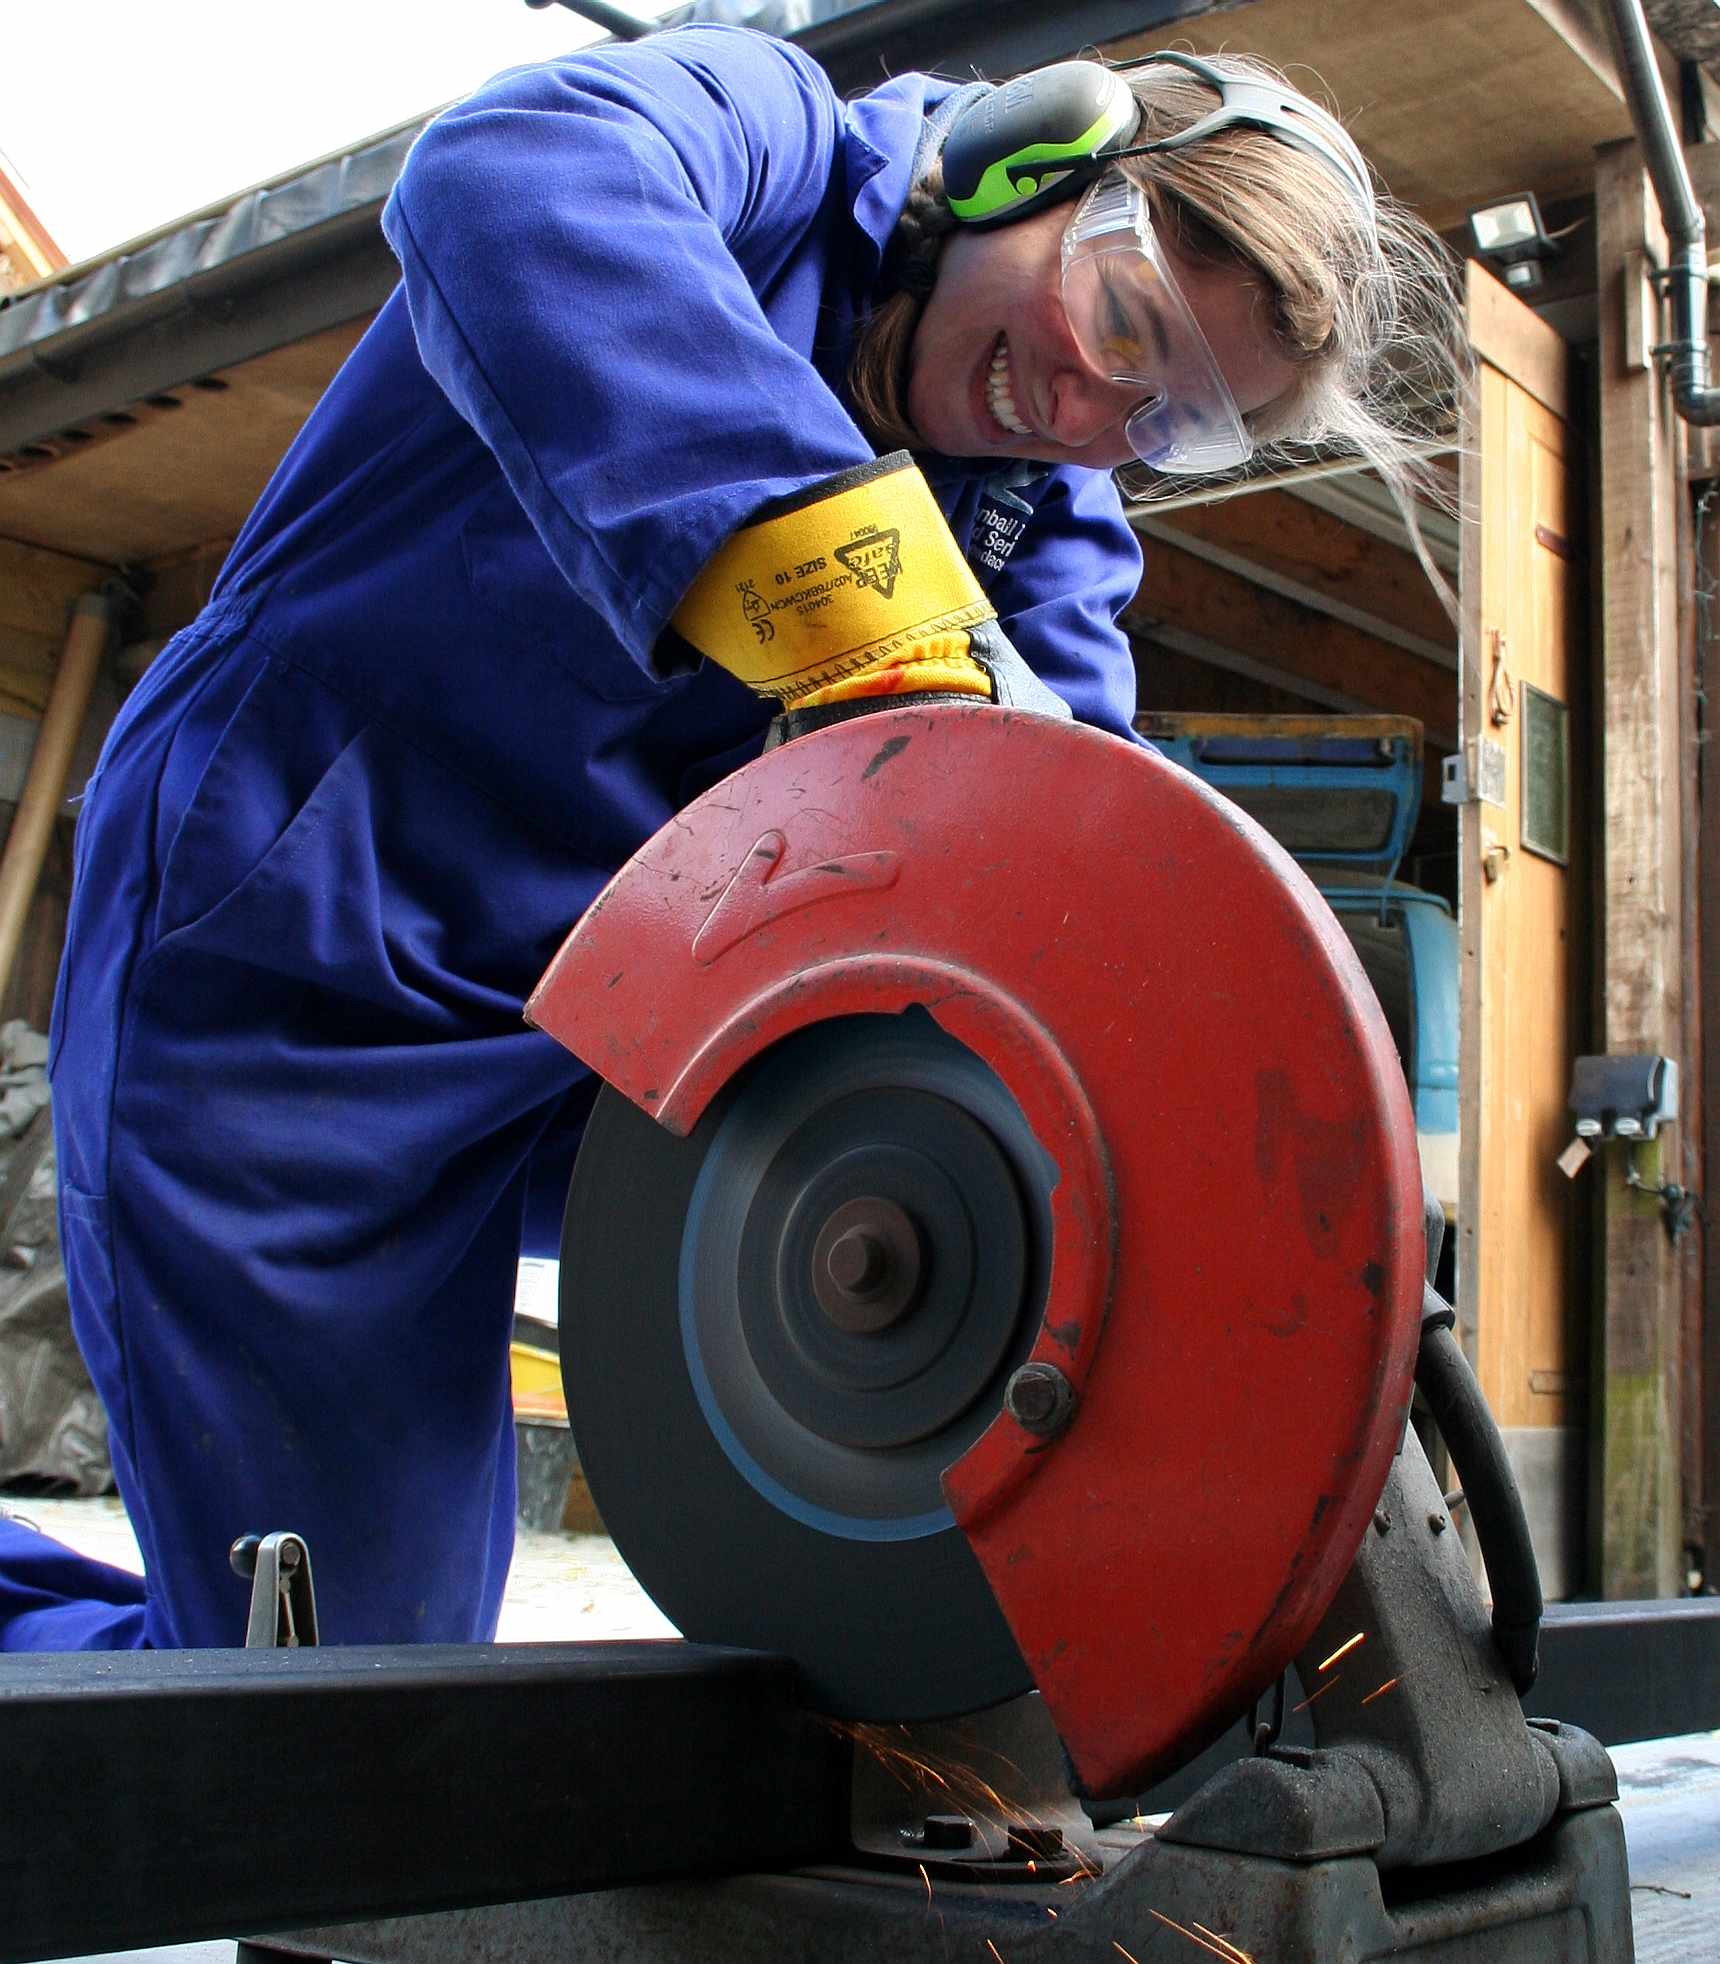 Lolita using a disc chop saw to cut steel tubing